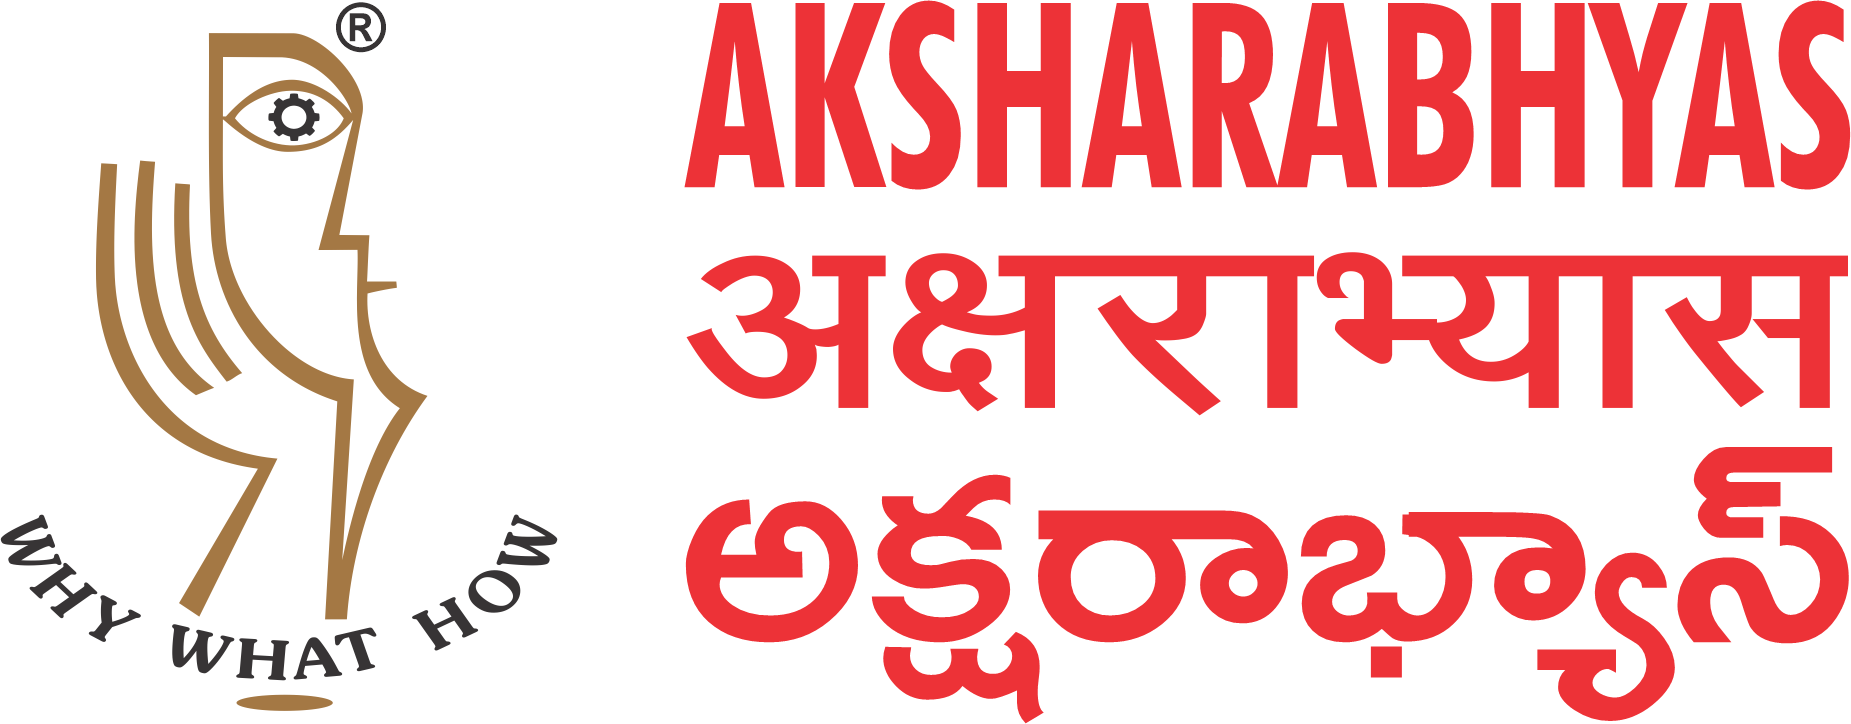 Alphabets Learning Writing Reading Practice for Childrens | Aksharabhyas | Children Early Learn Alphabet | Slates | Tracing Slates |